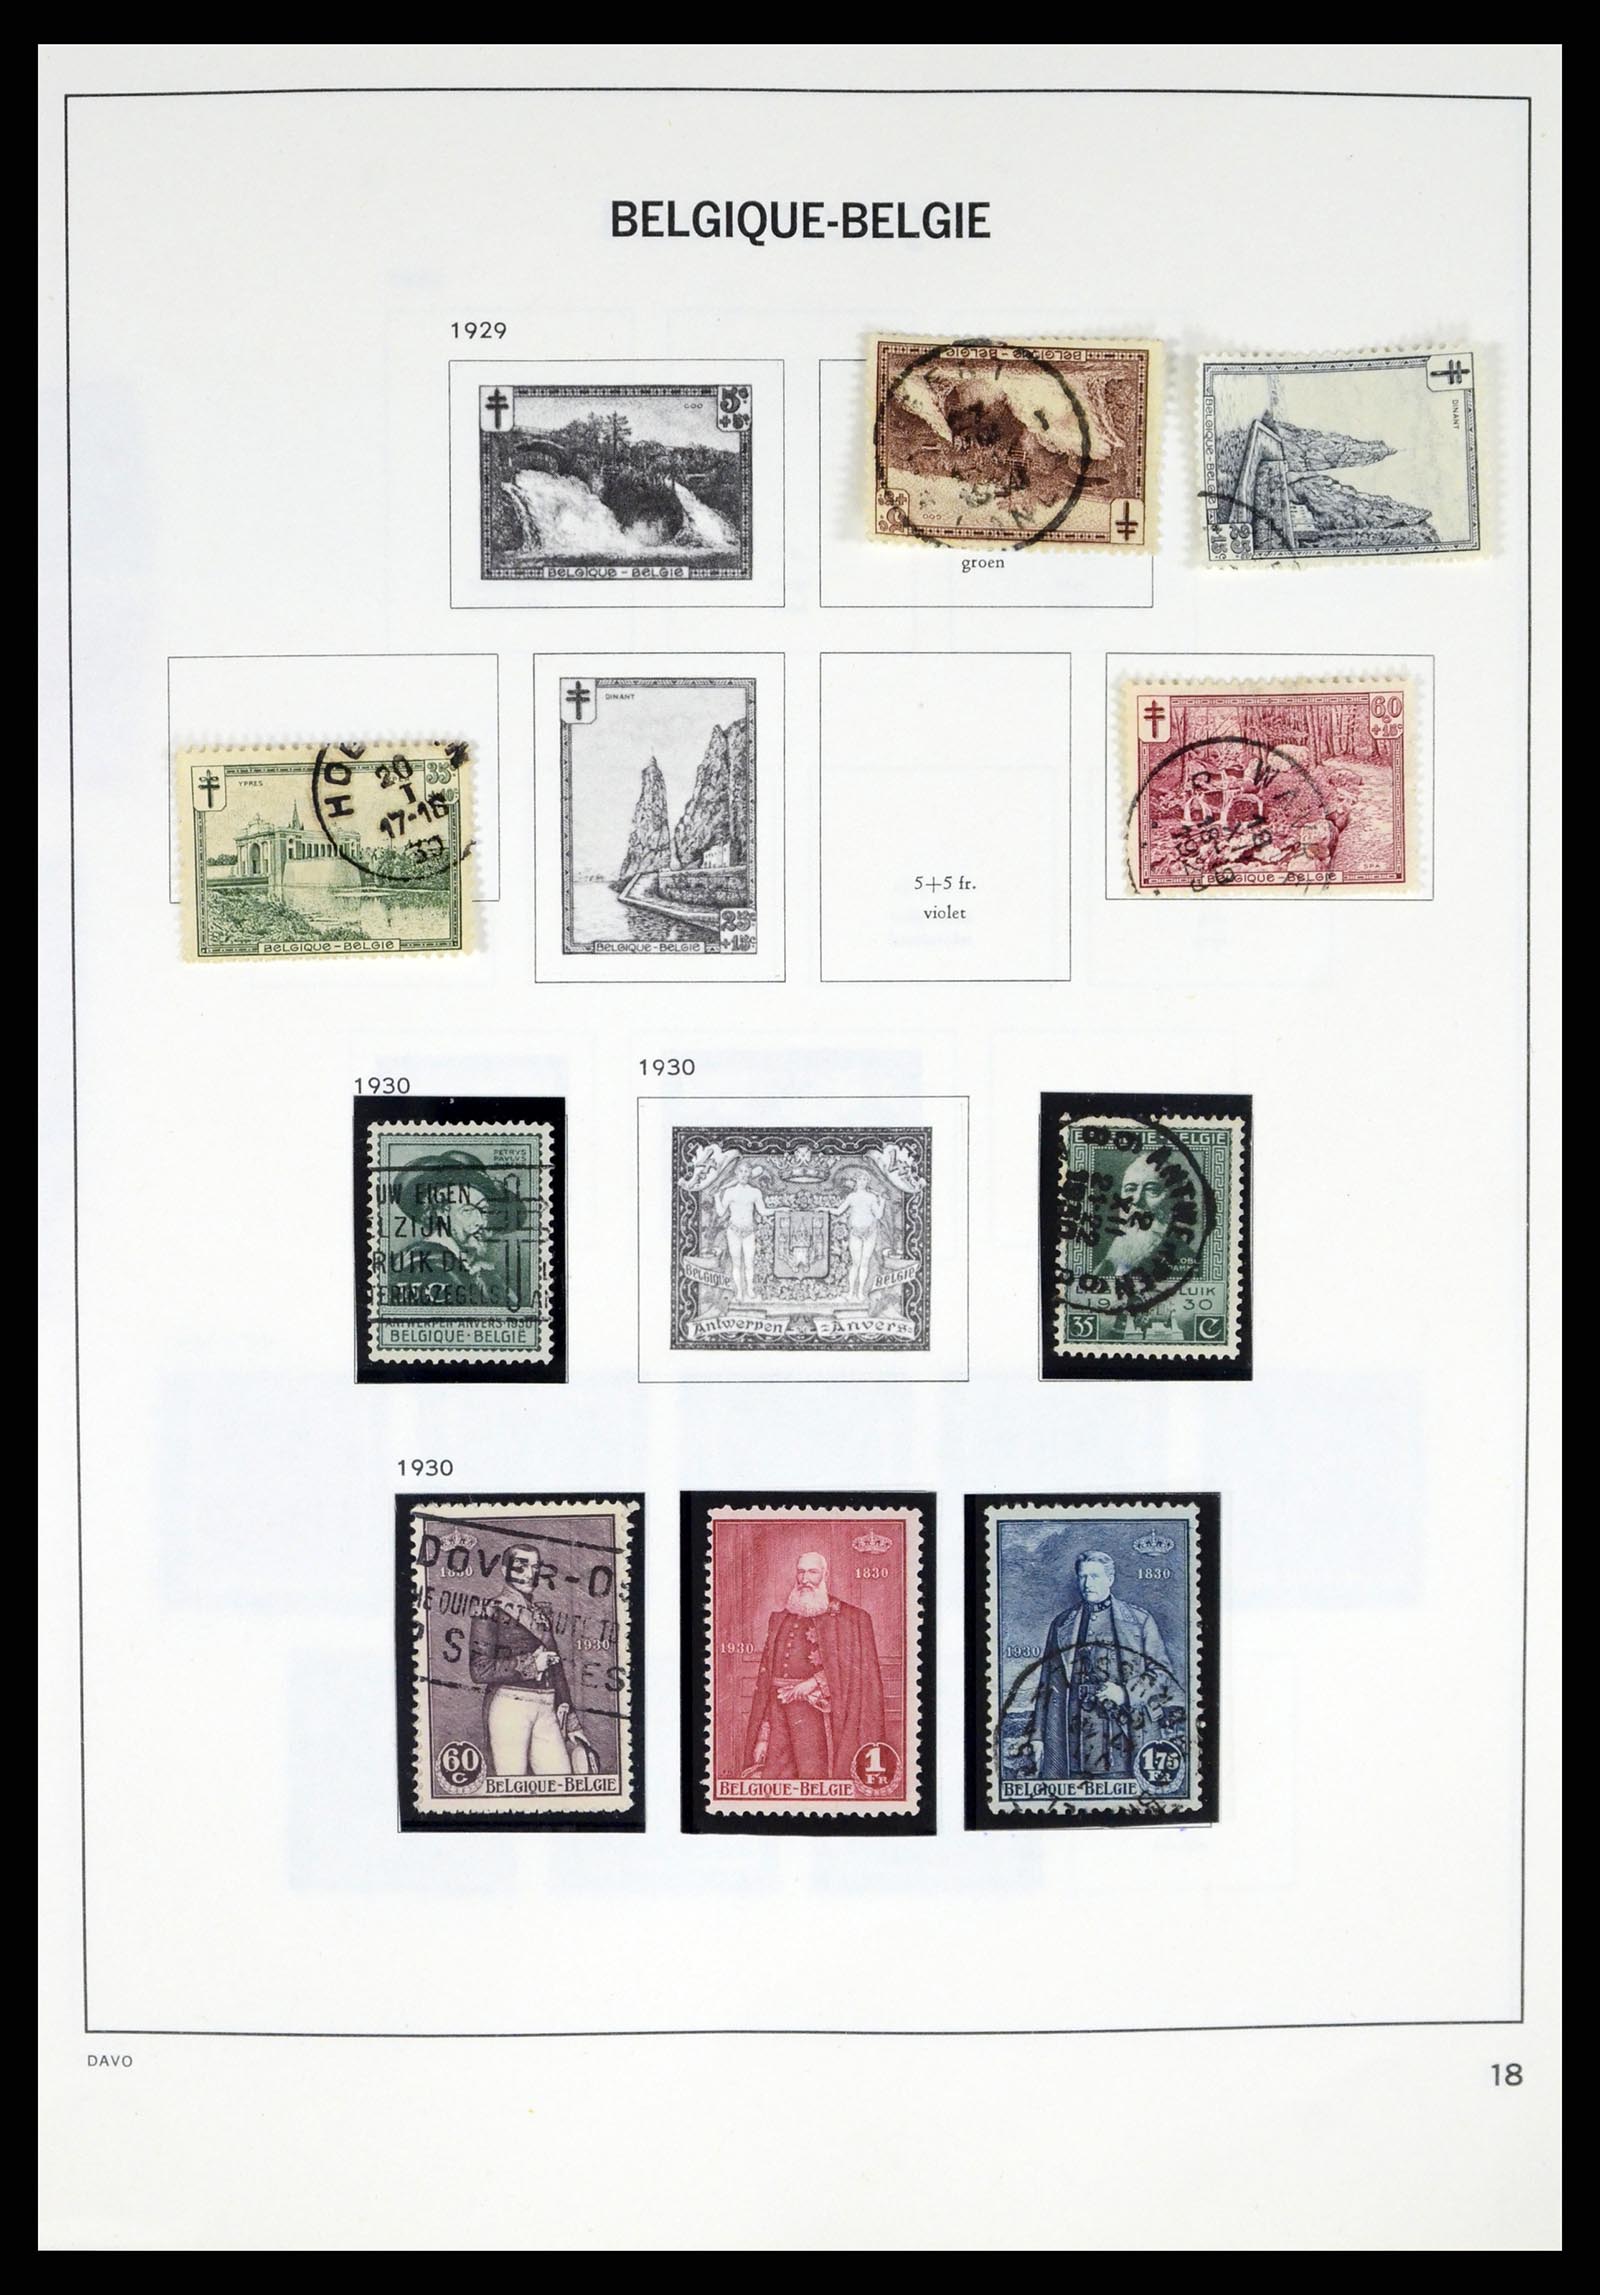 37367 017 - Stamp collection 37367 Belgium 1849-2003.